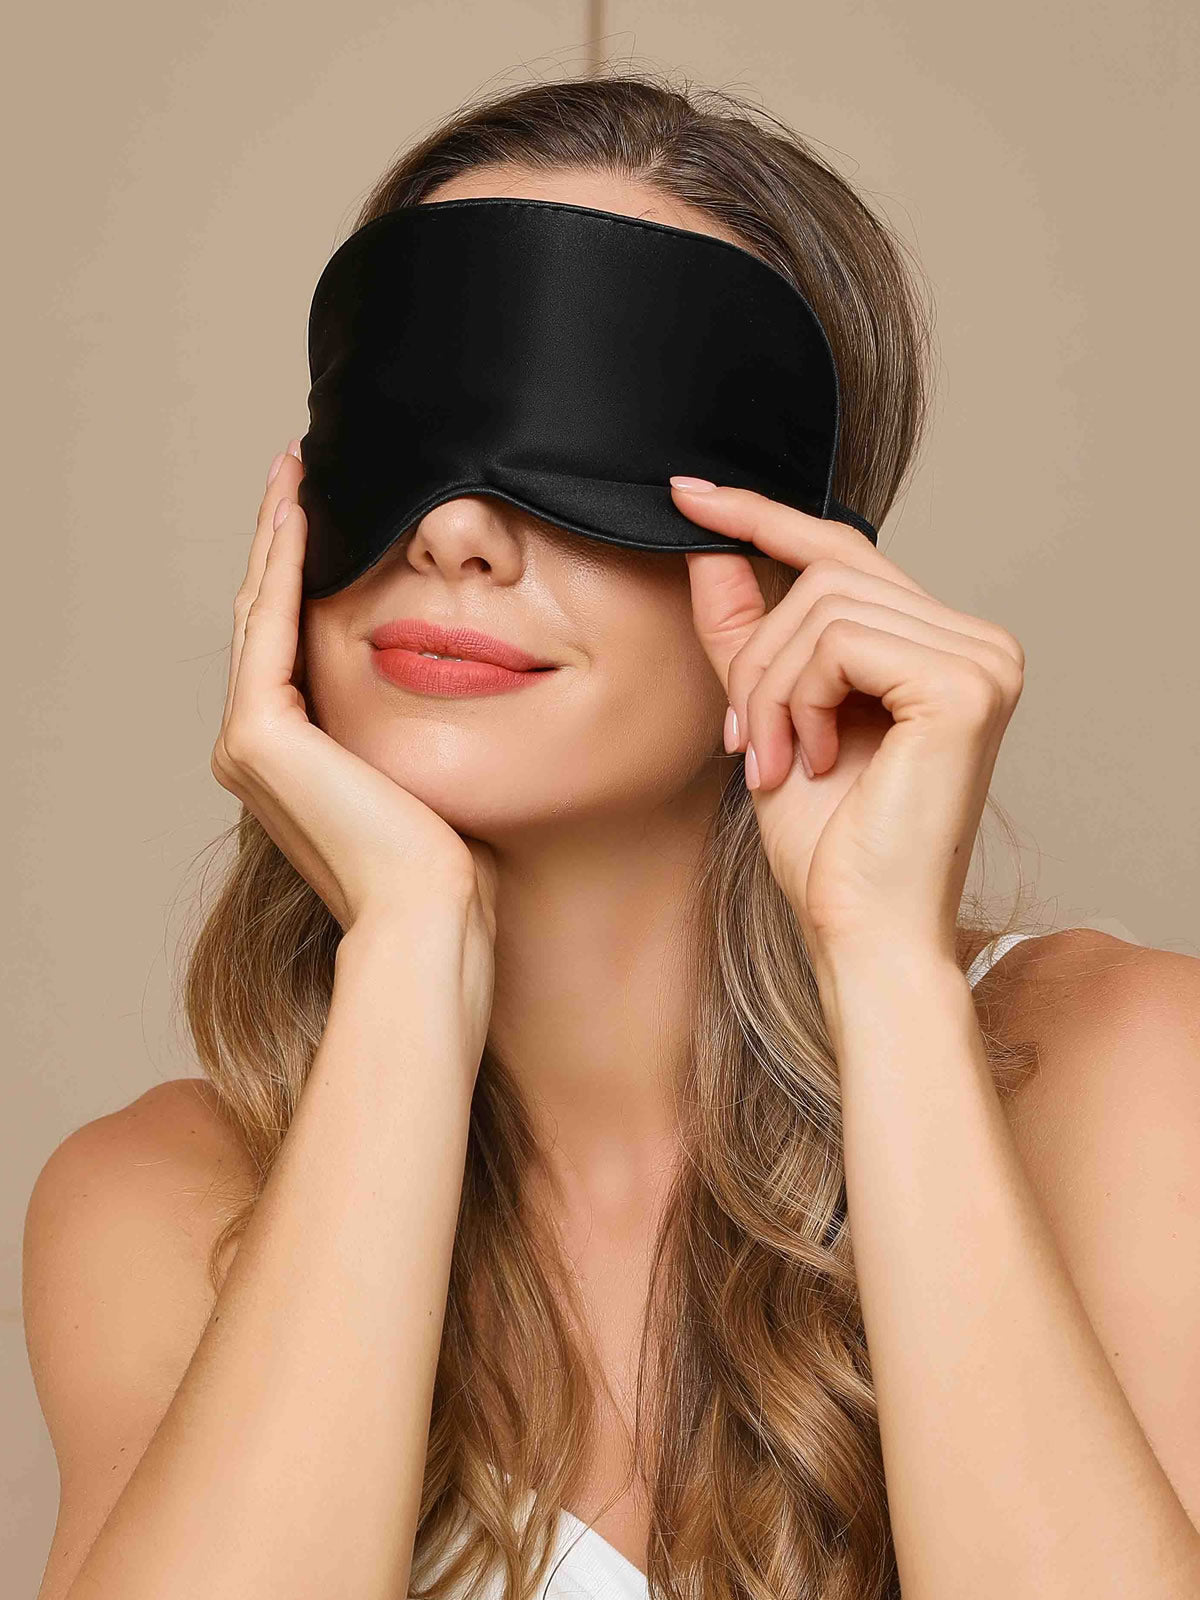 Silksilky Real Silk Sleeping Mask Comfortable Sleep Masks for Eyes